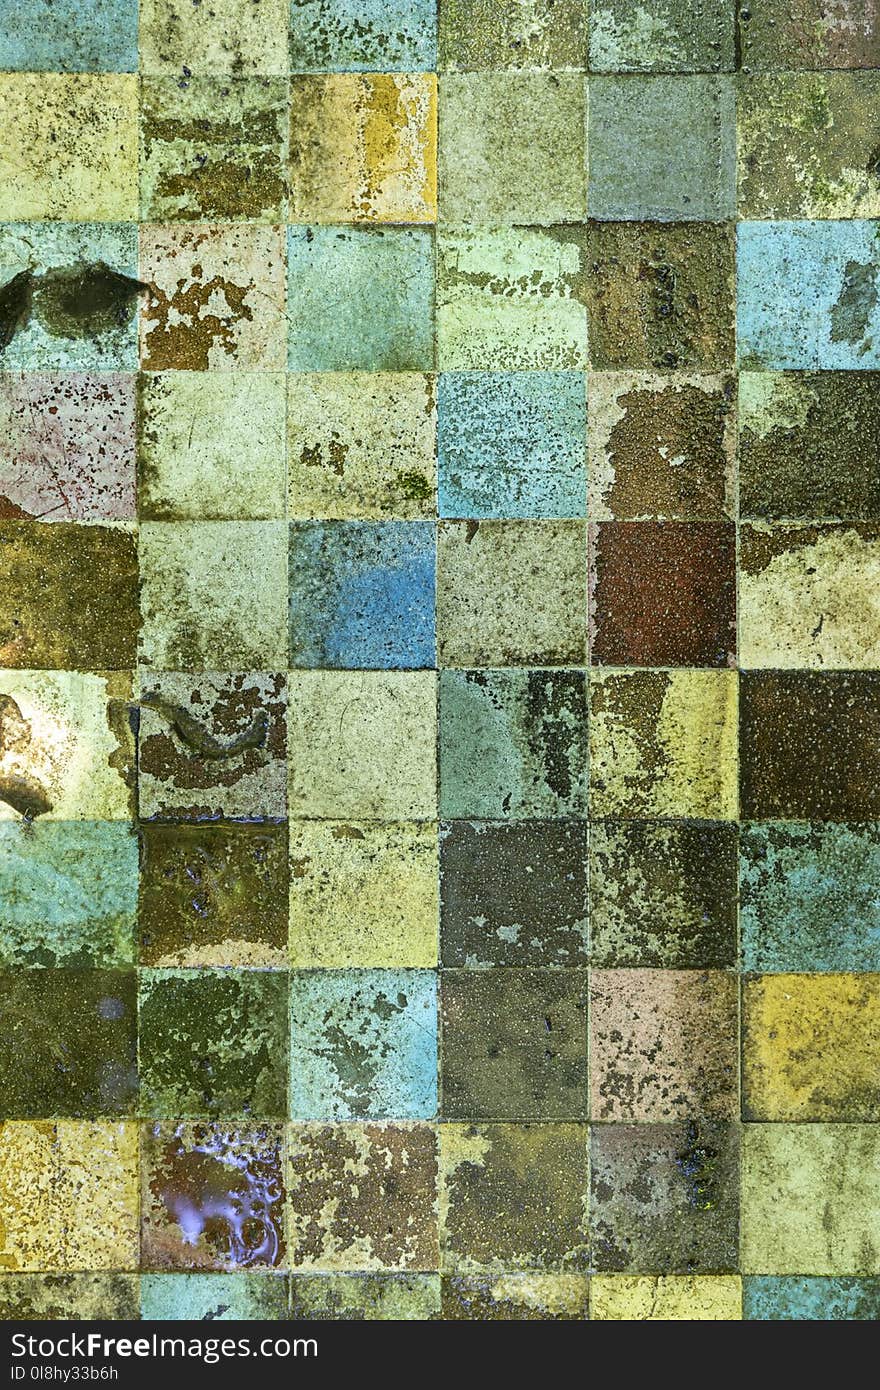 Old dirty enamel mosaic in the garden